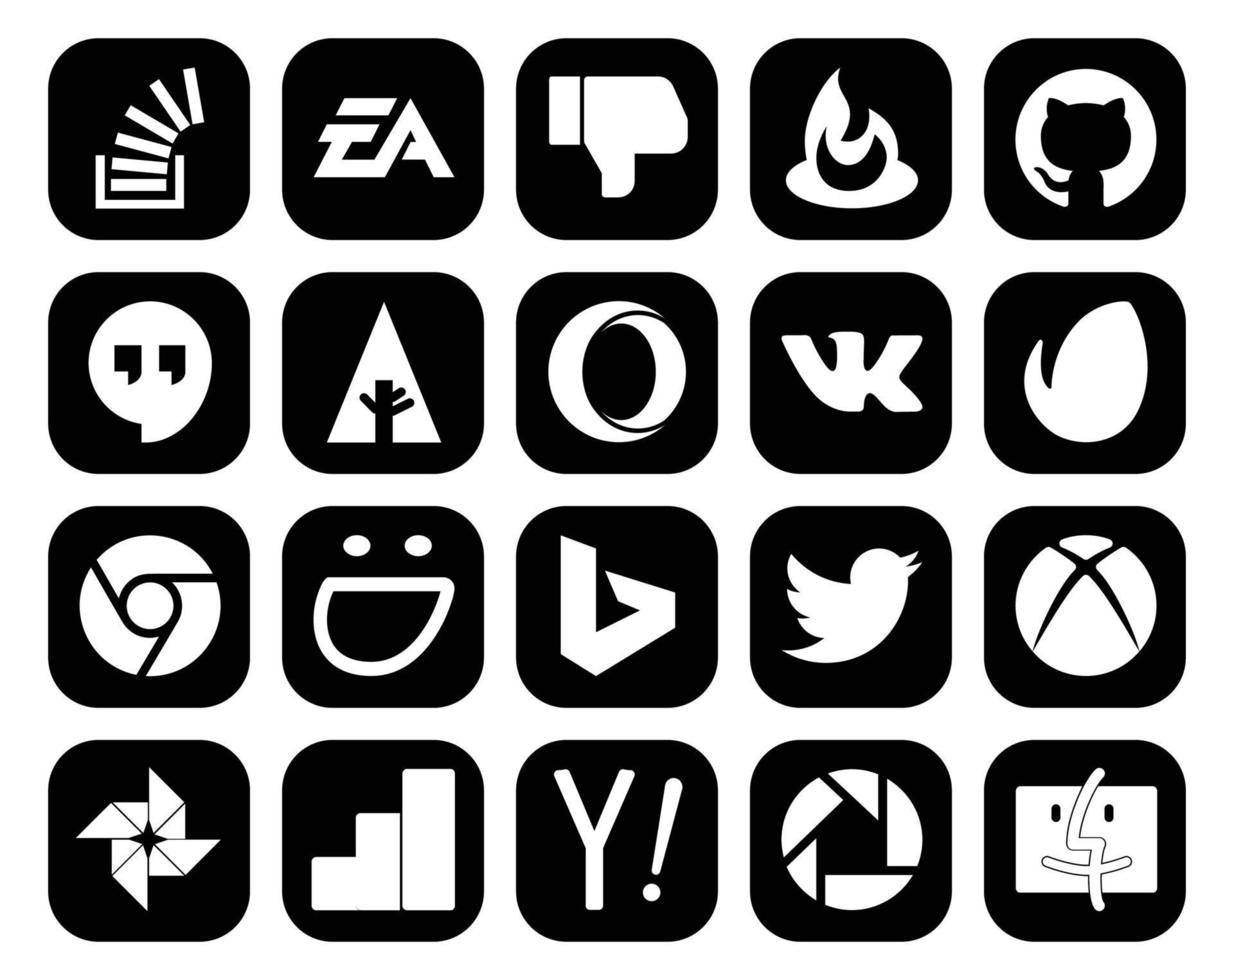 Paquete de 20 íconos de redes sociales que incluye bing chrome feedburner envato opera vector